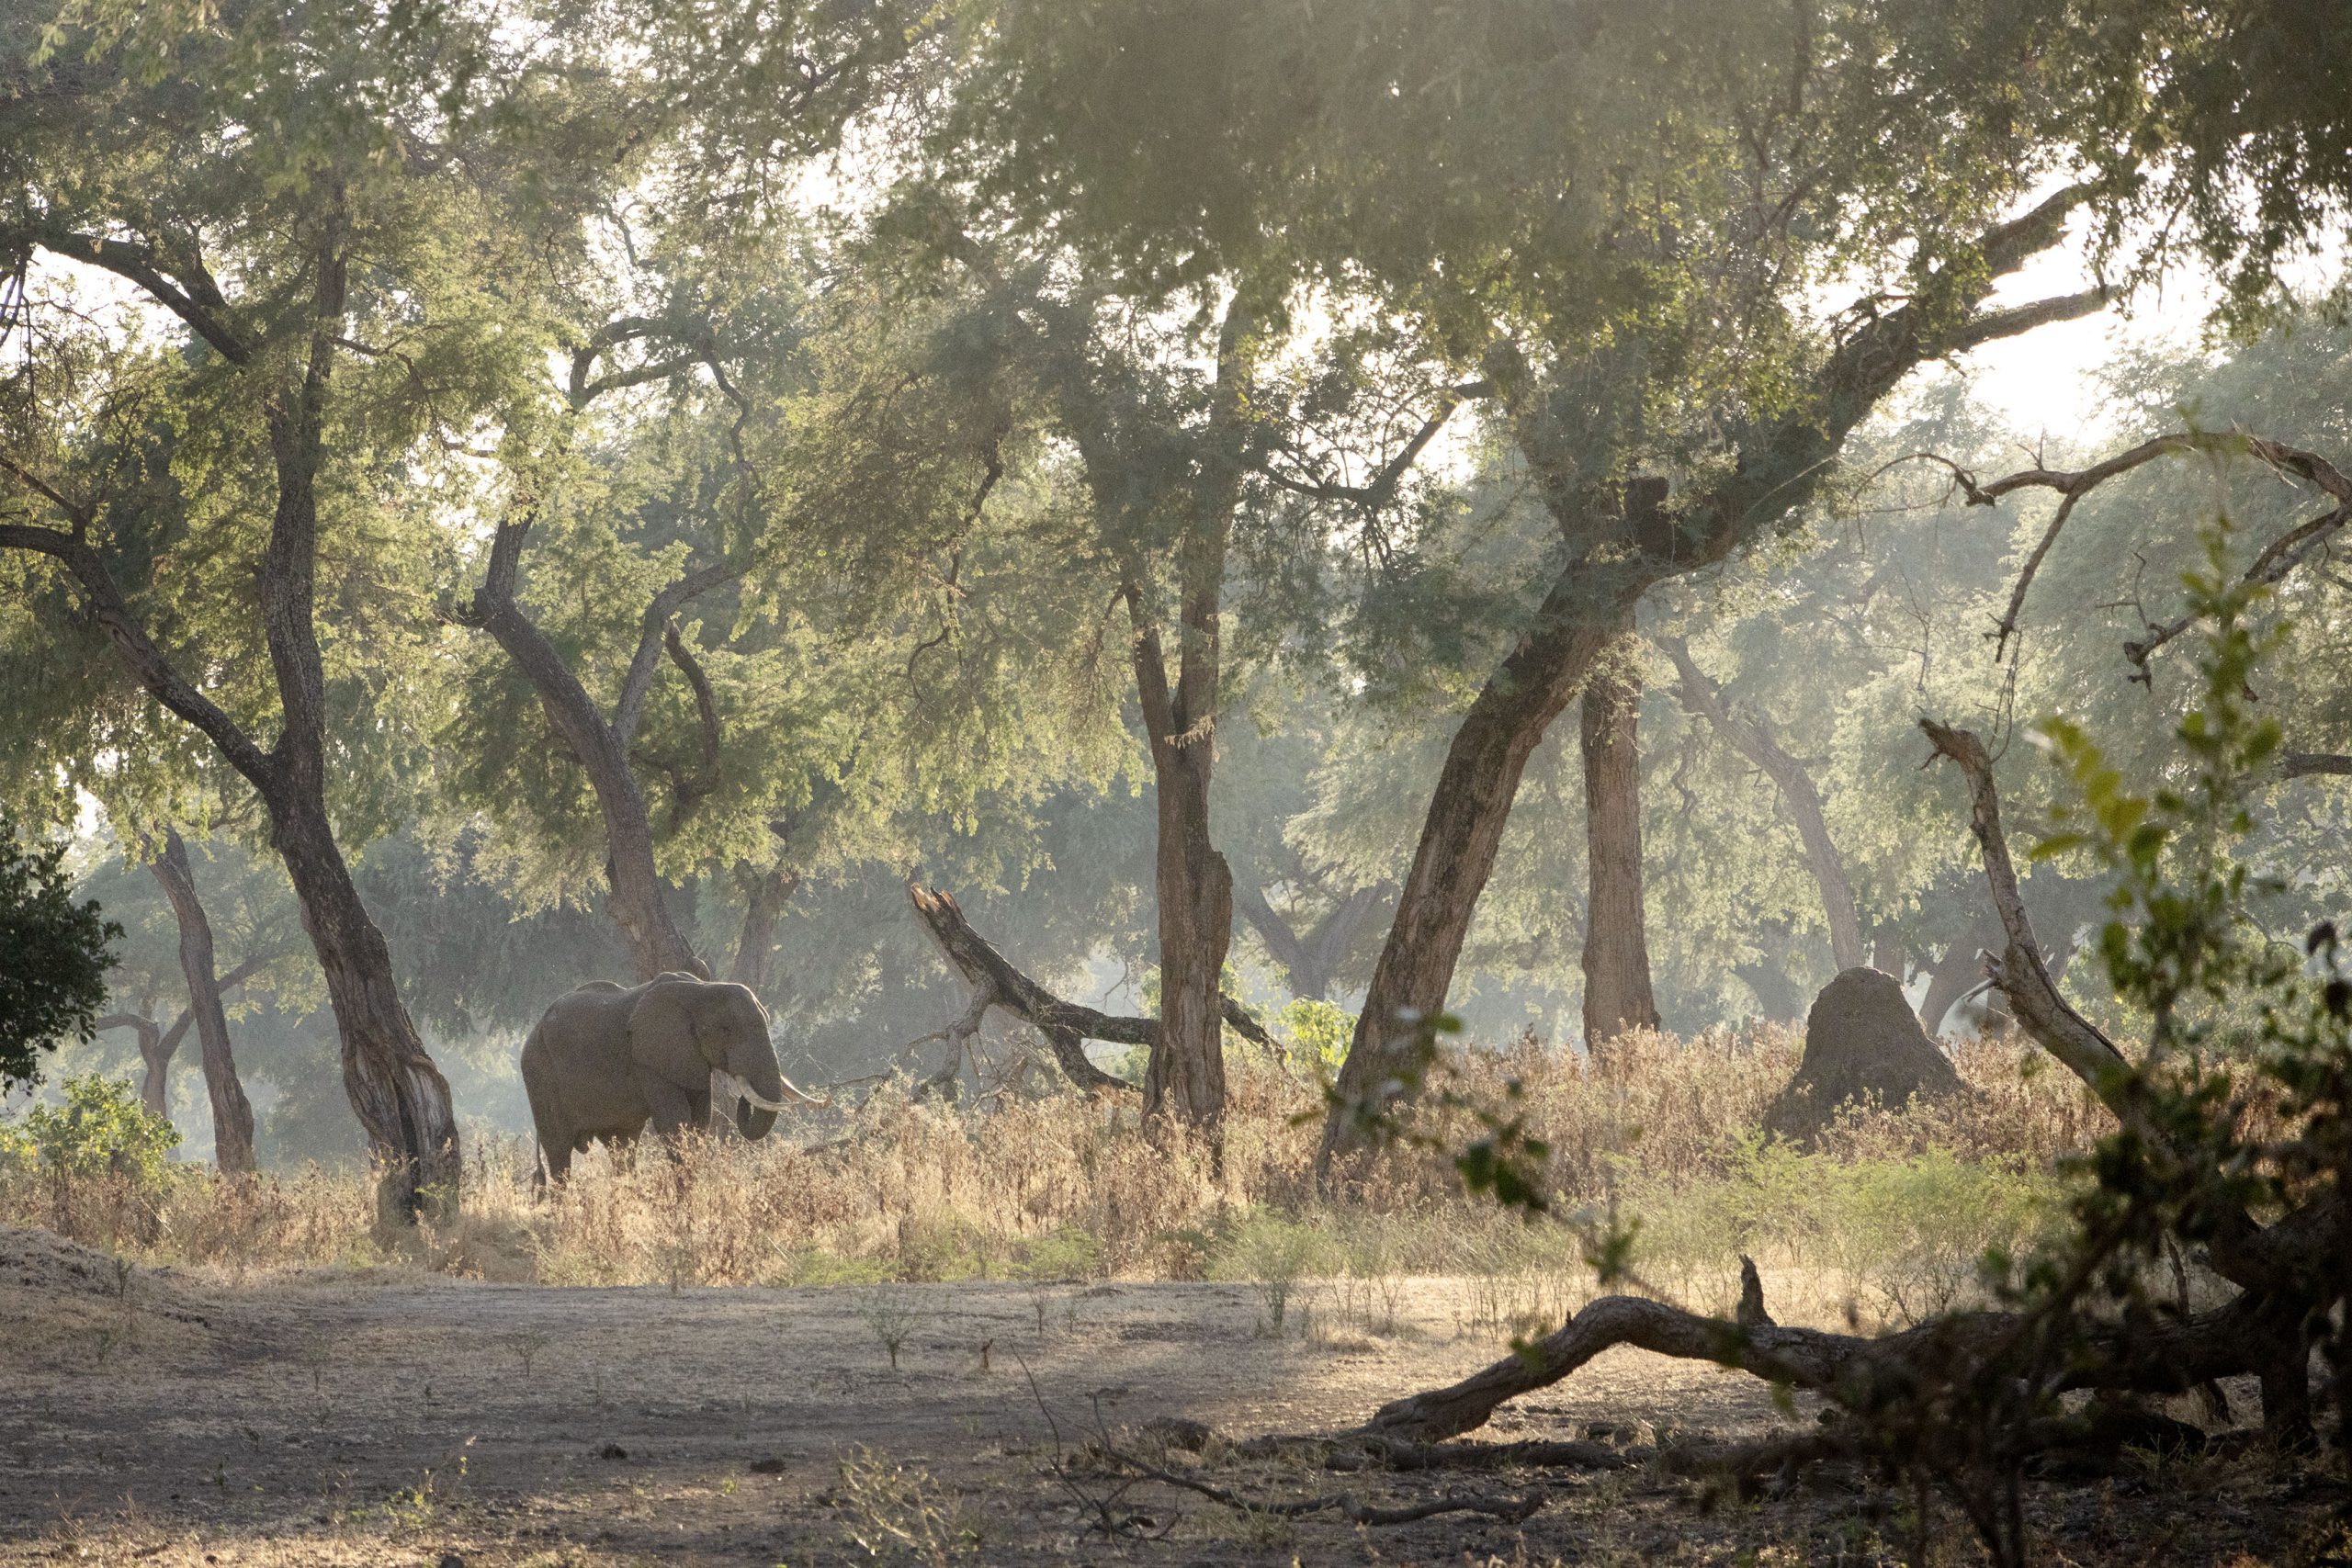 Elephant bull during walking safaris, Mana Pools, Zimbabwe.